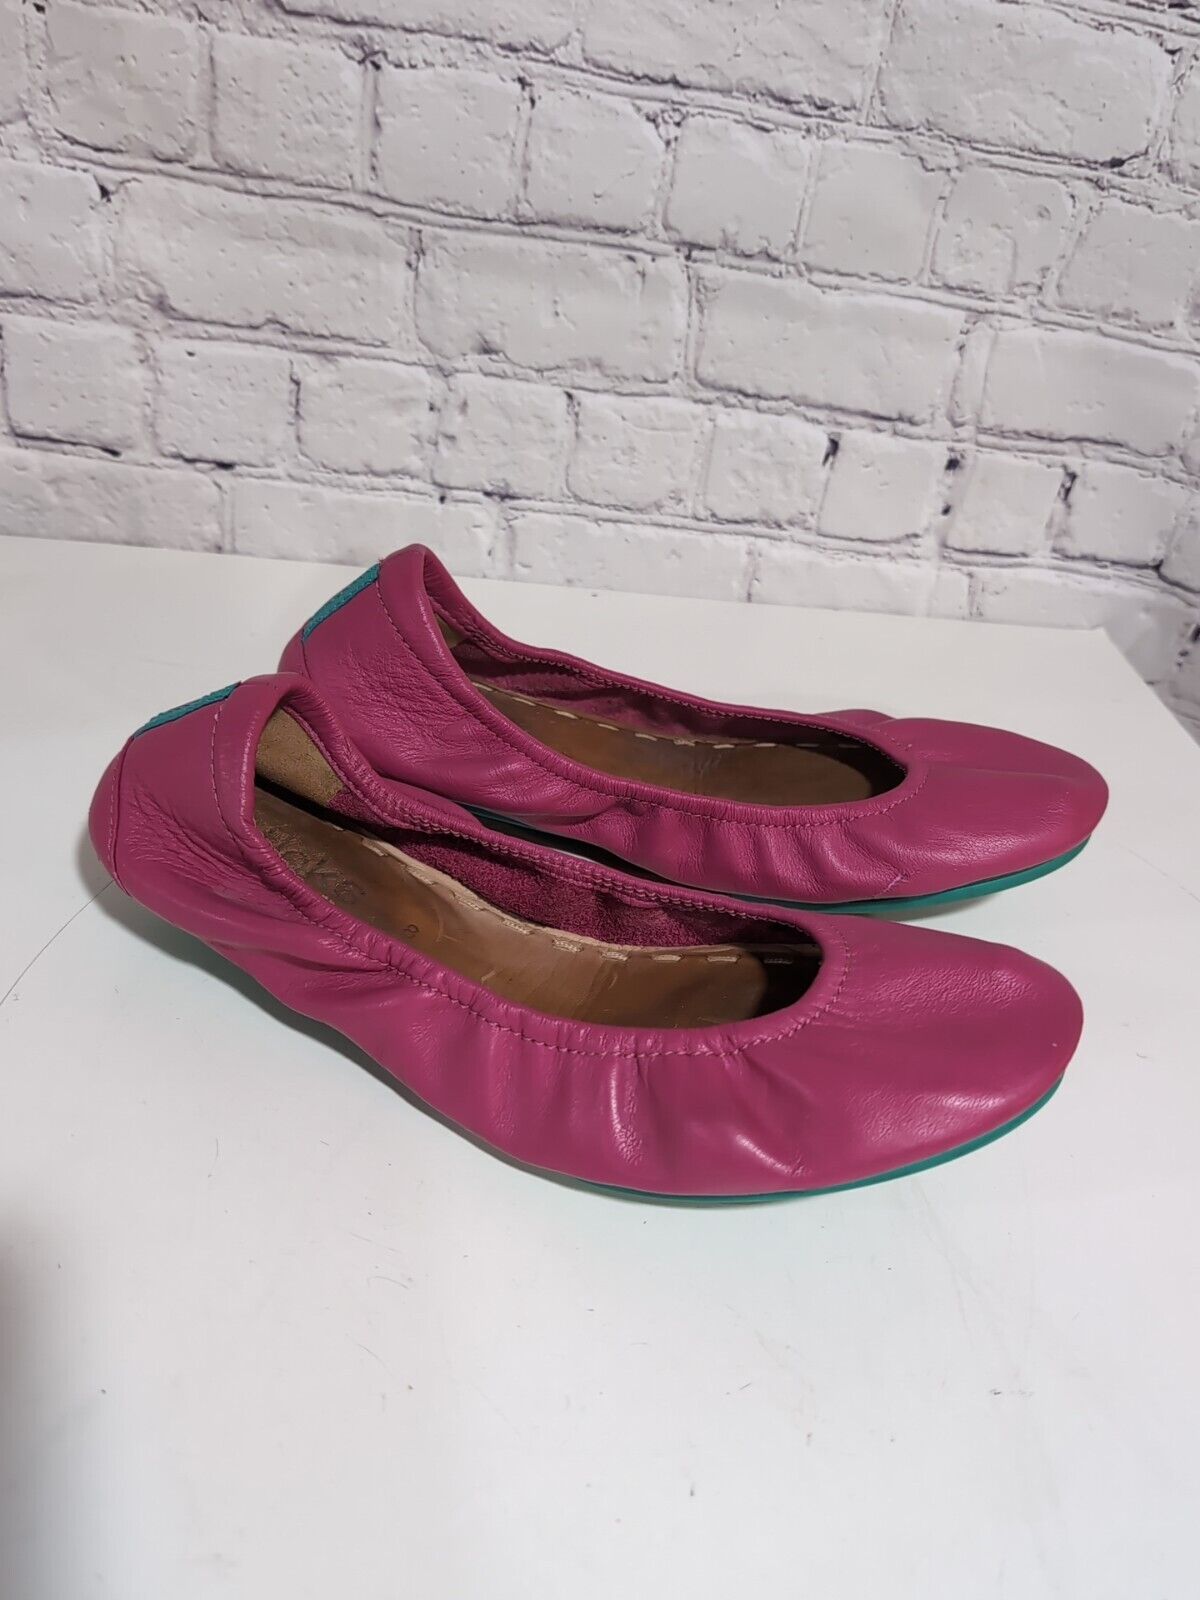 Tieks Fushia Pink Ballet Flats Size 8 - image 1